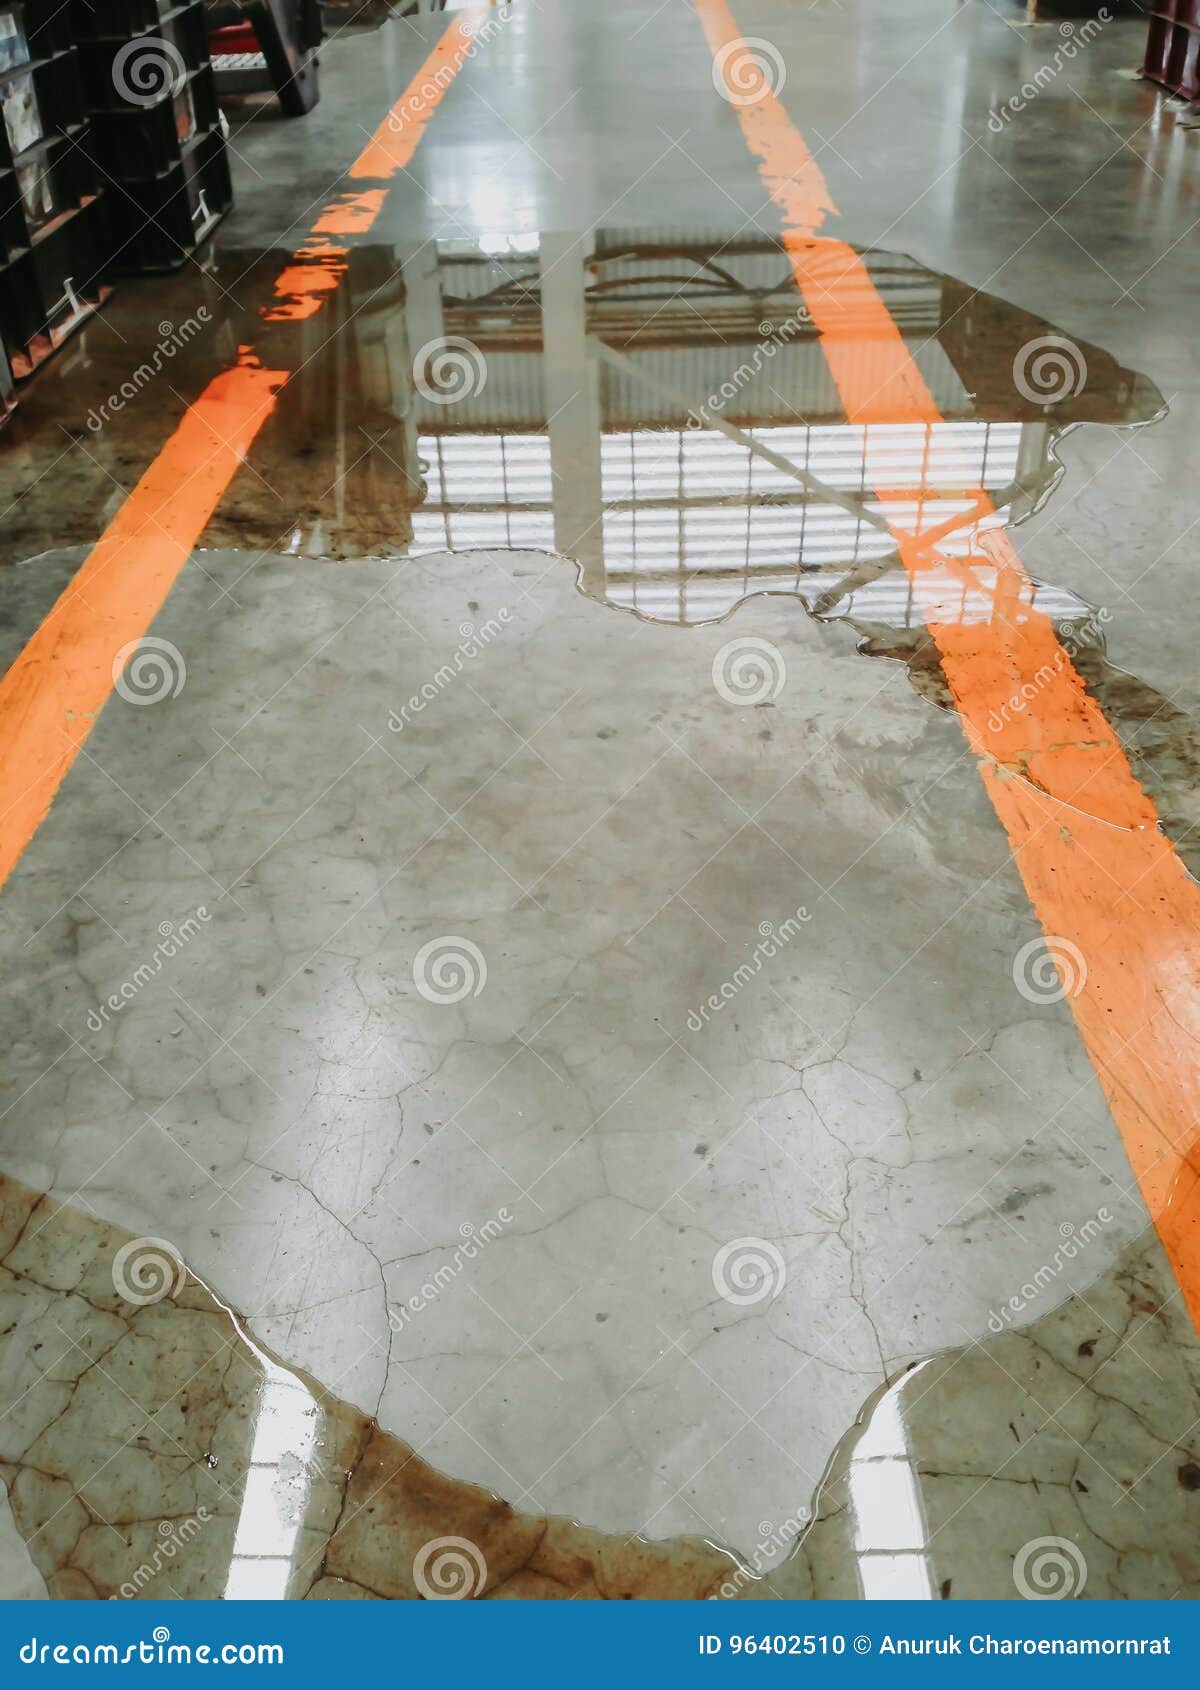 Oil Or Water Leak On Concrete Floor , Need Clean And Careful Dan Stock Photo Image of break